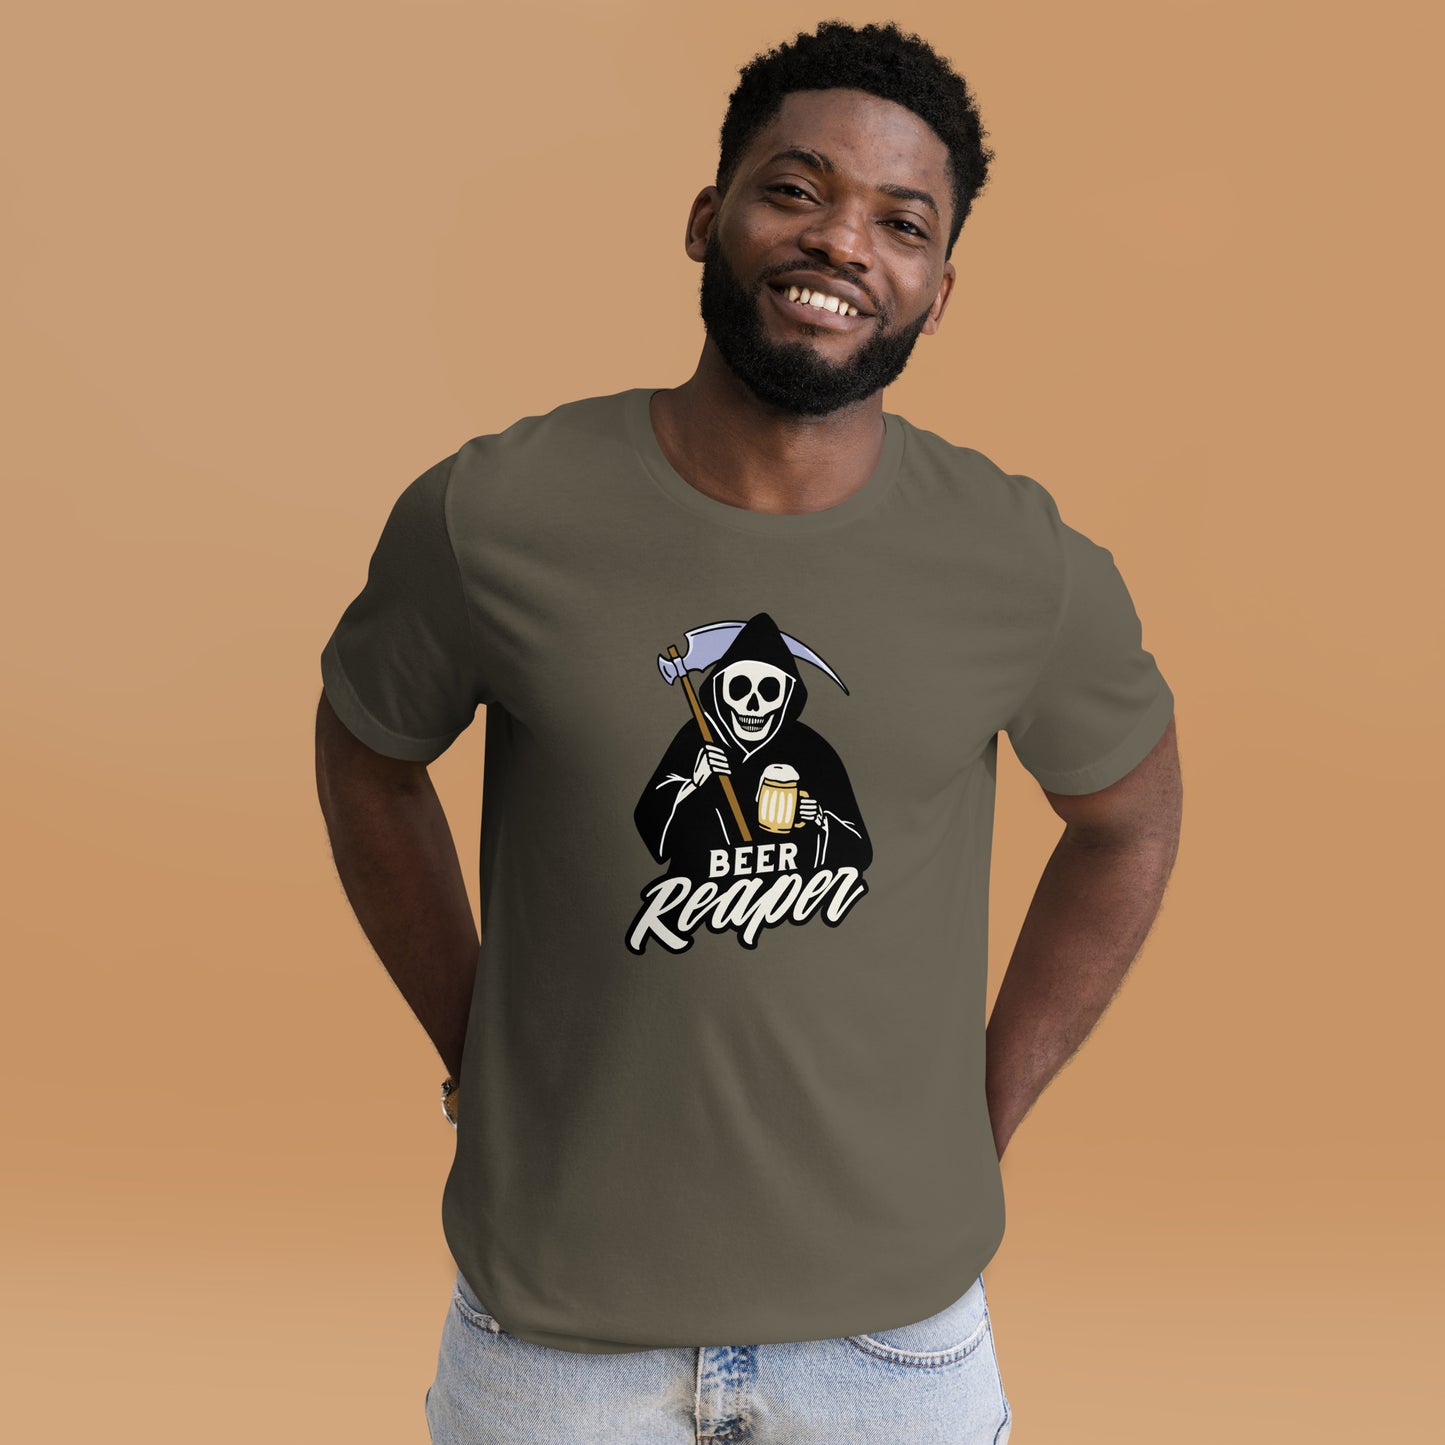 Beer Reaper Unisex t-shirt